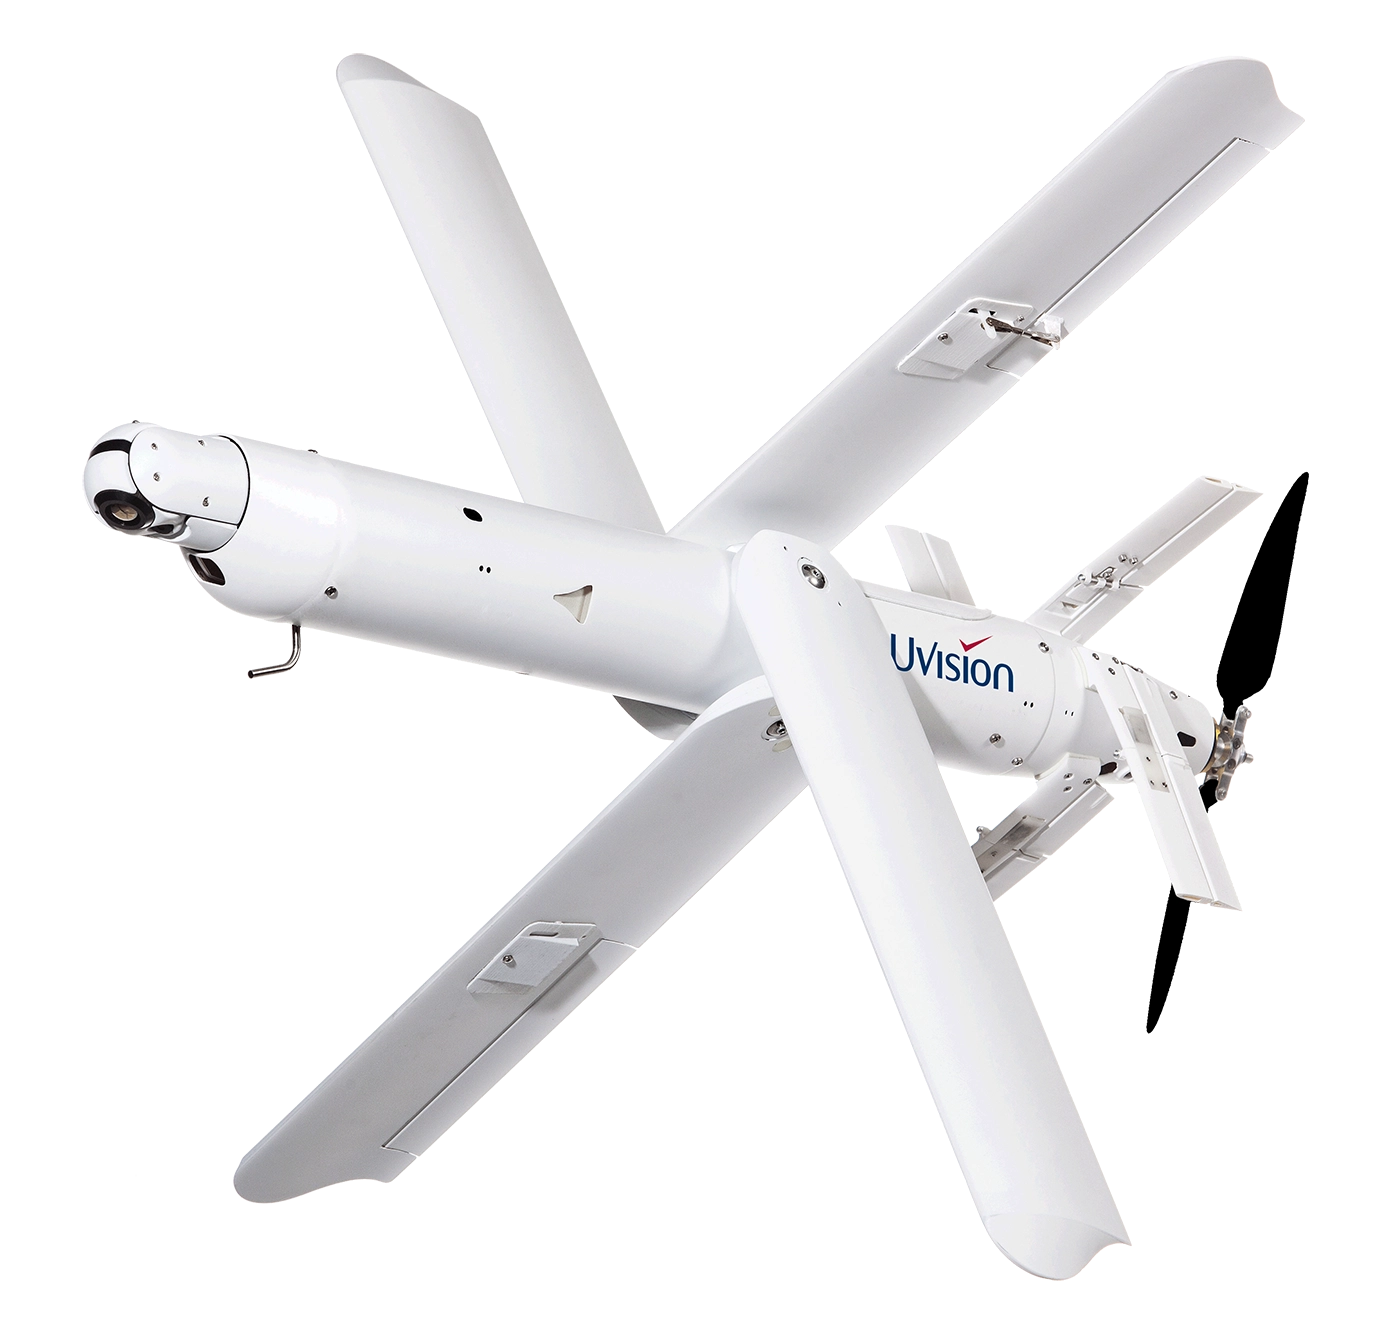 Hero-30 weaponized drone